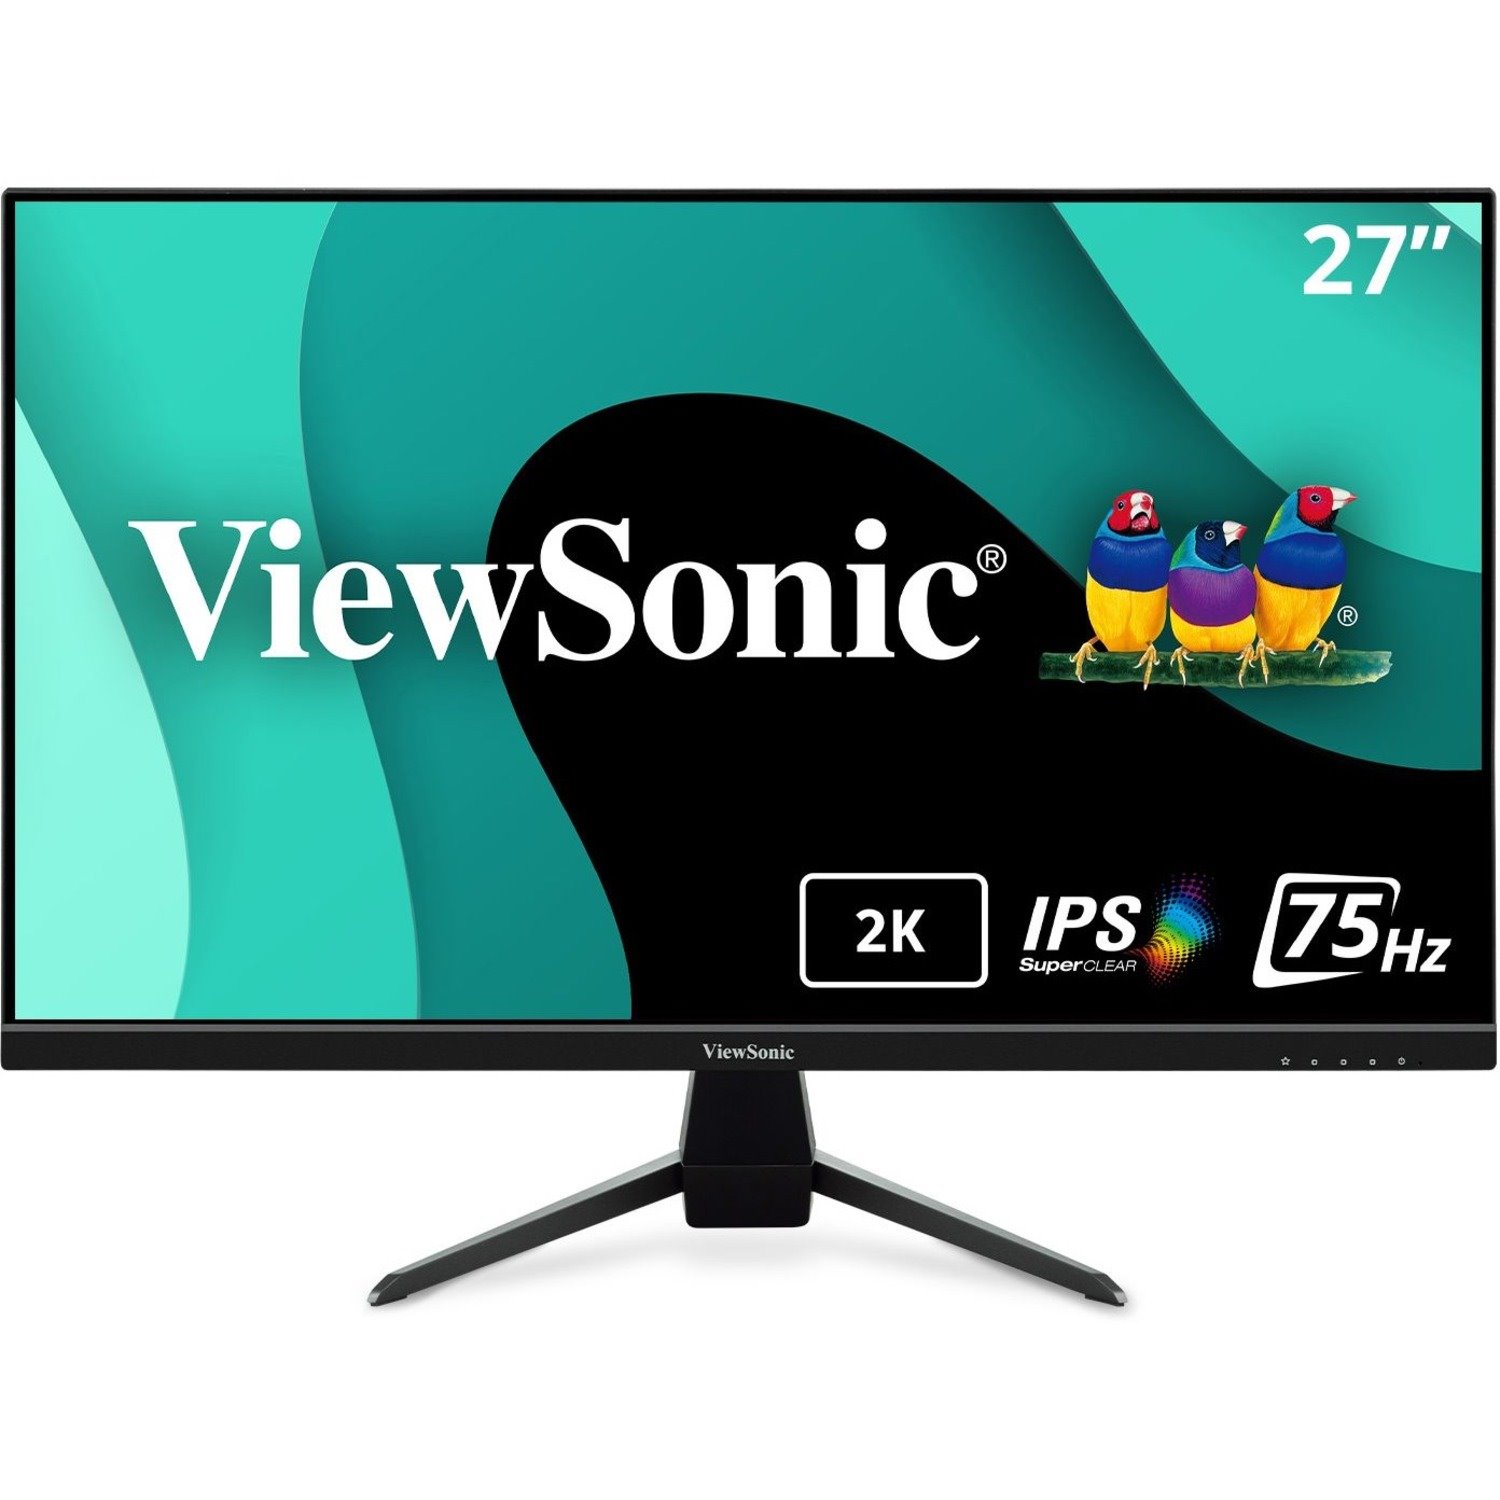 ViewSonic 27" 2K QHD Thin-Bezel IPS Monitor with USB-C, HDMI, and DisplayPort